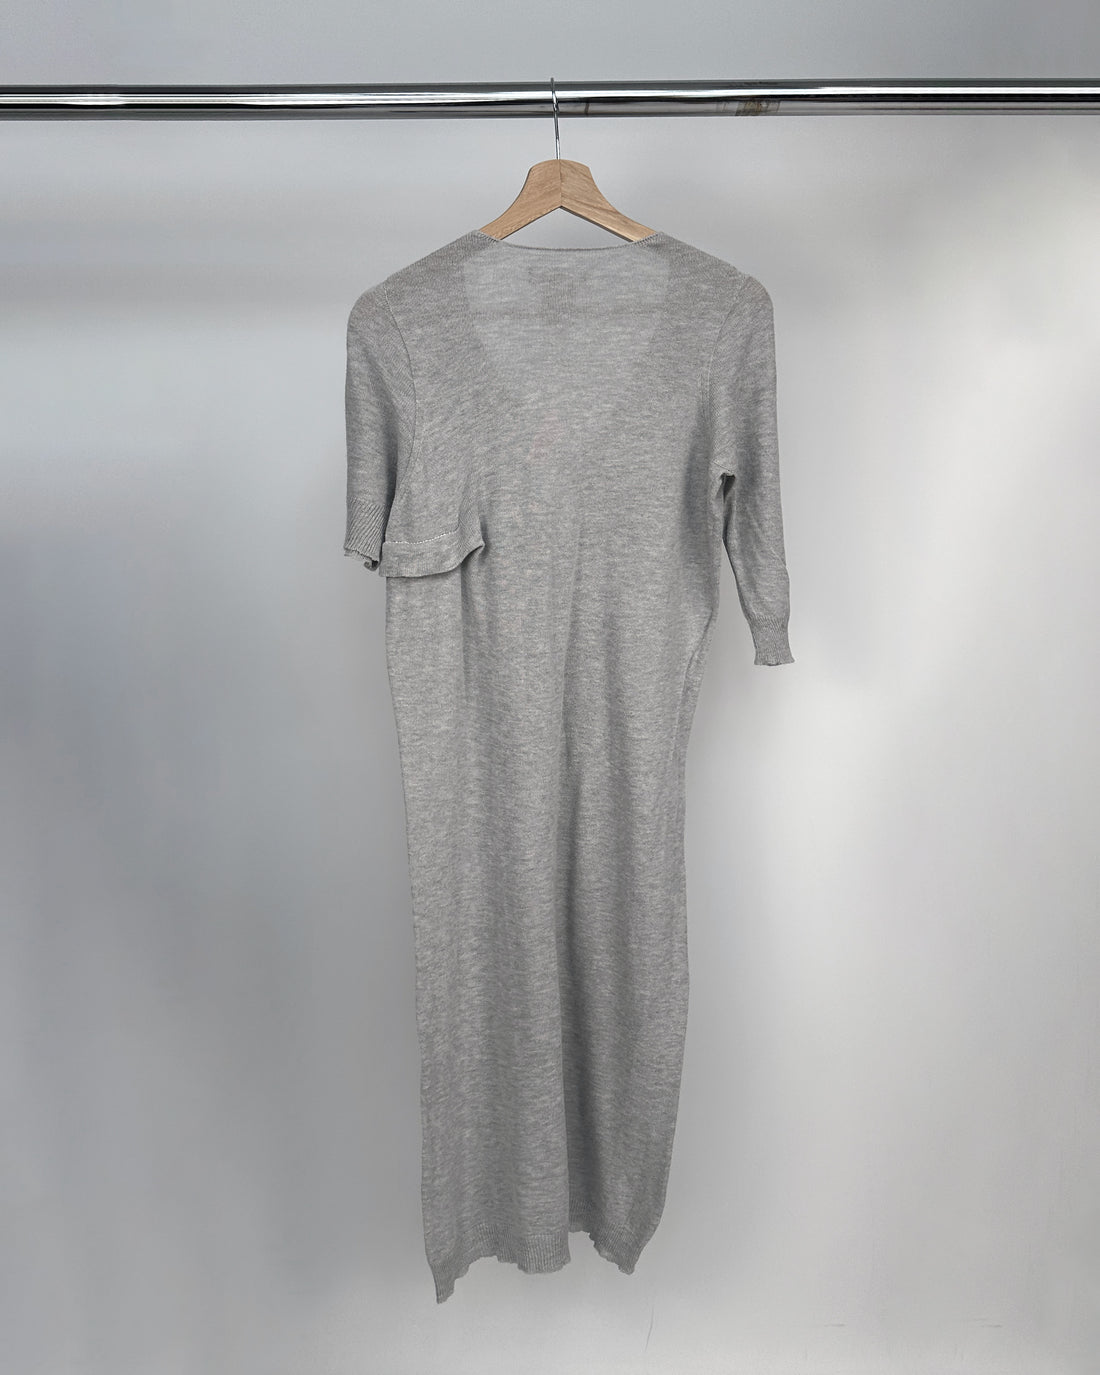 Yohji Yamamoto Asymmetric Grey Dress 2000's